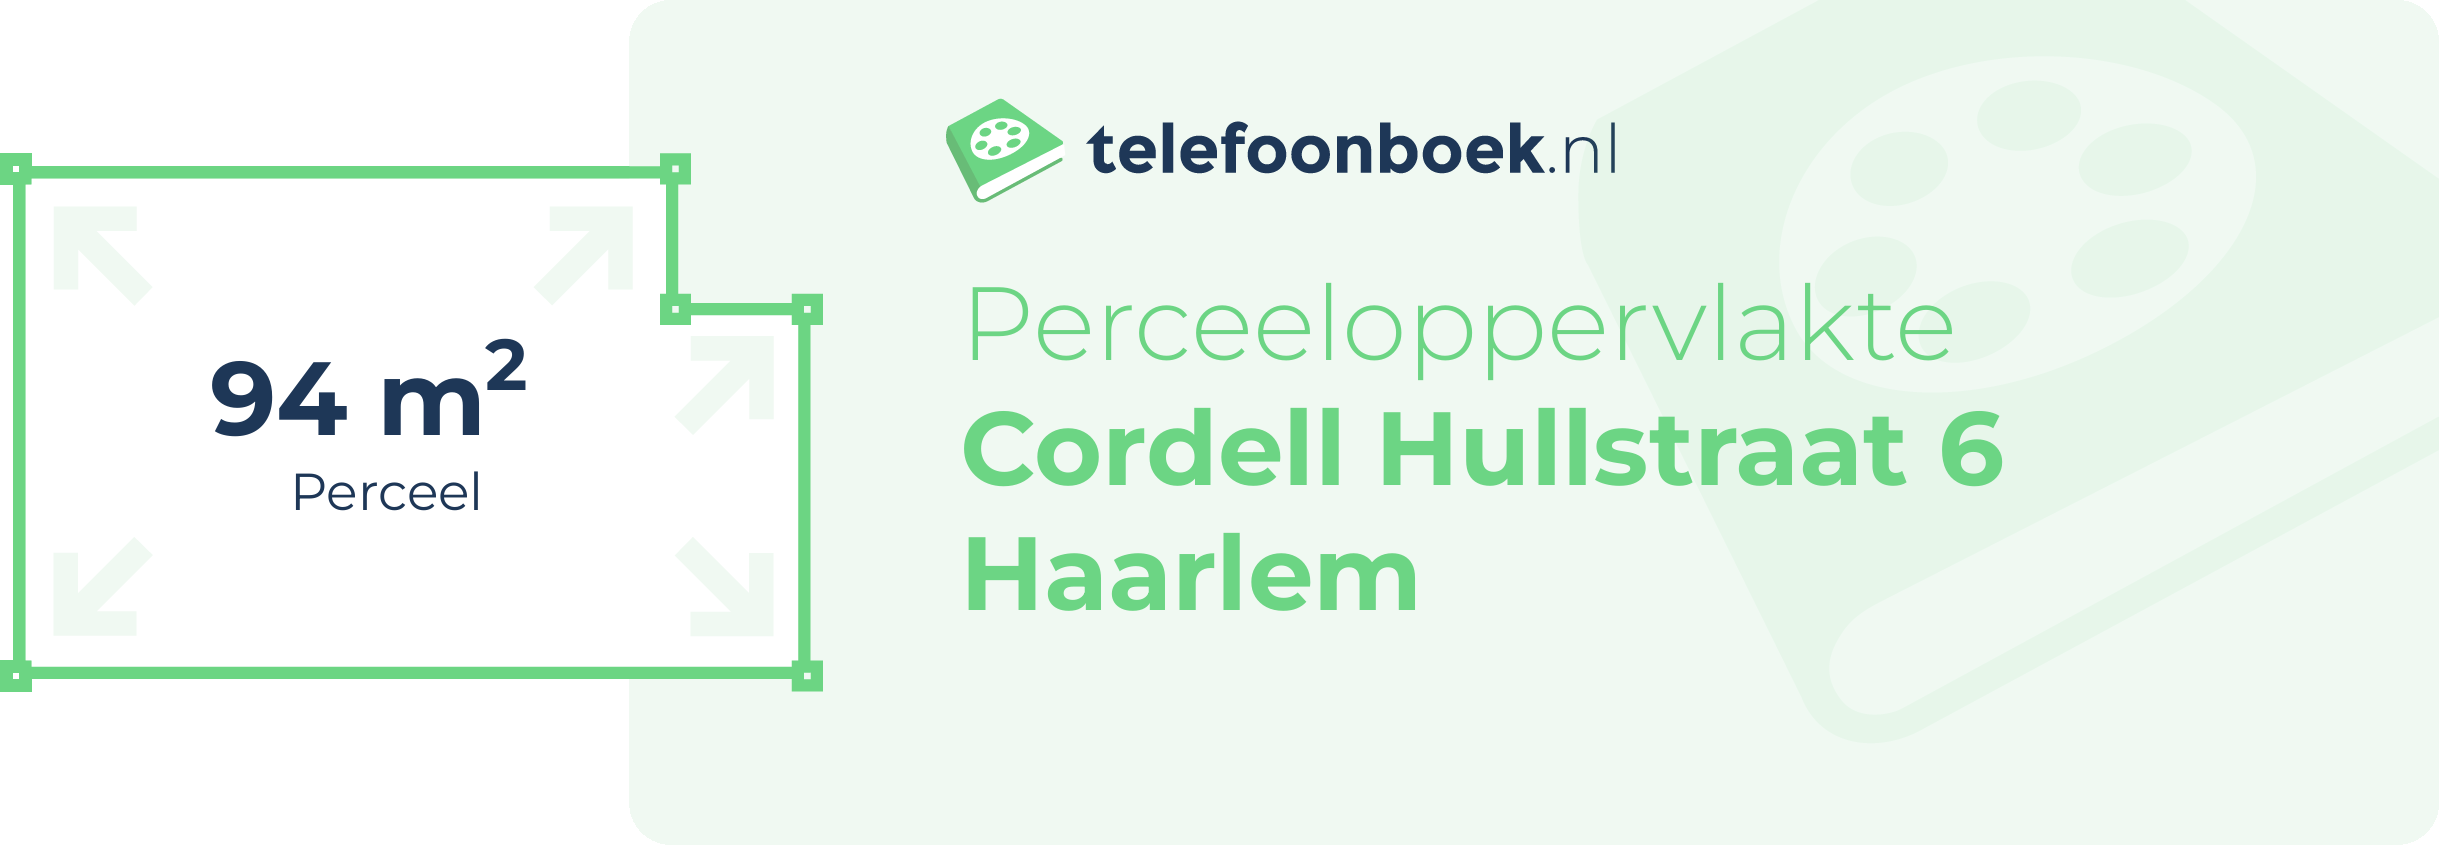 Perceeloppervlakte Cordell Hullstraat 6 Haarlem